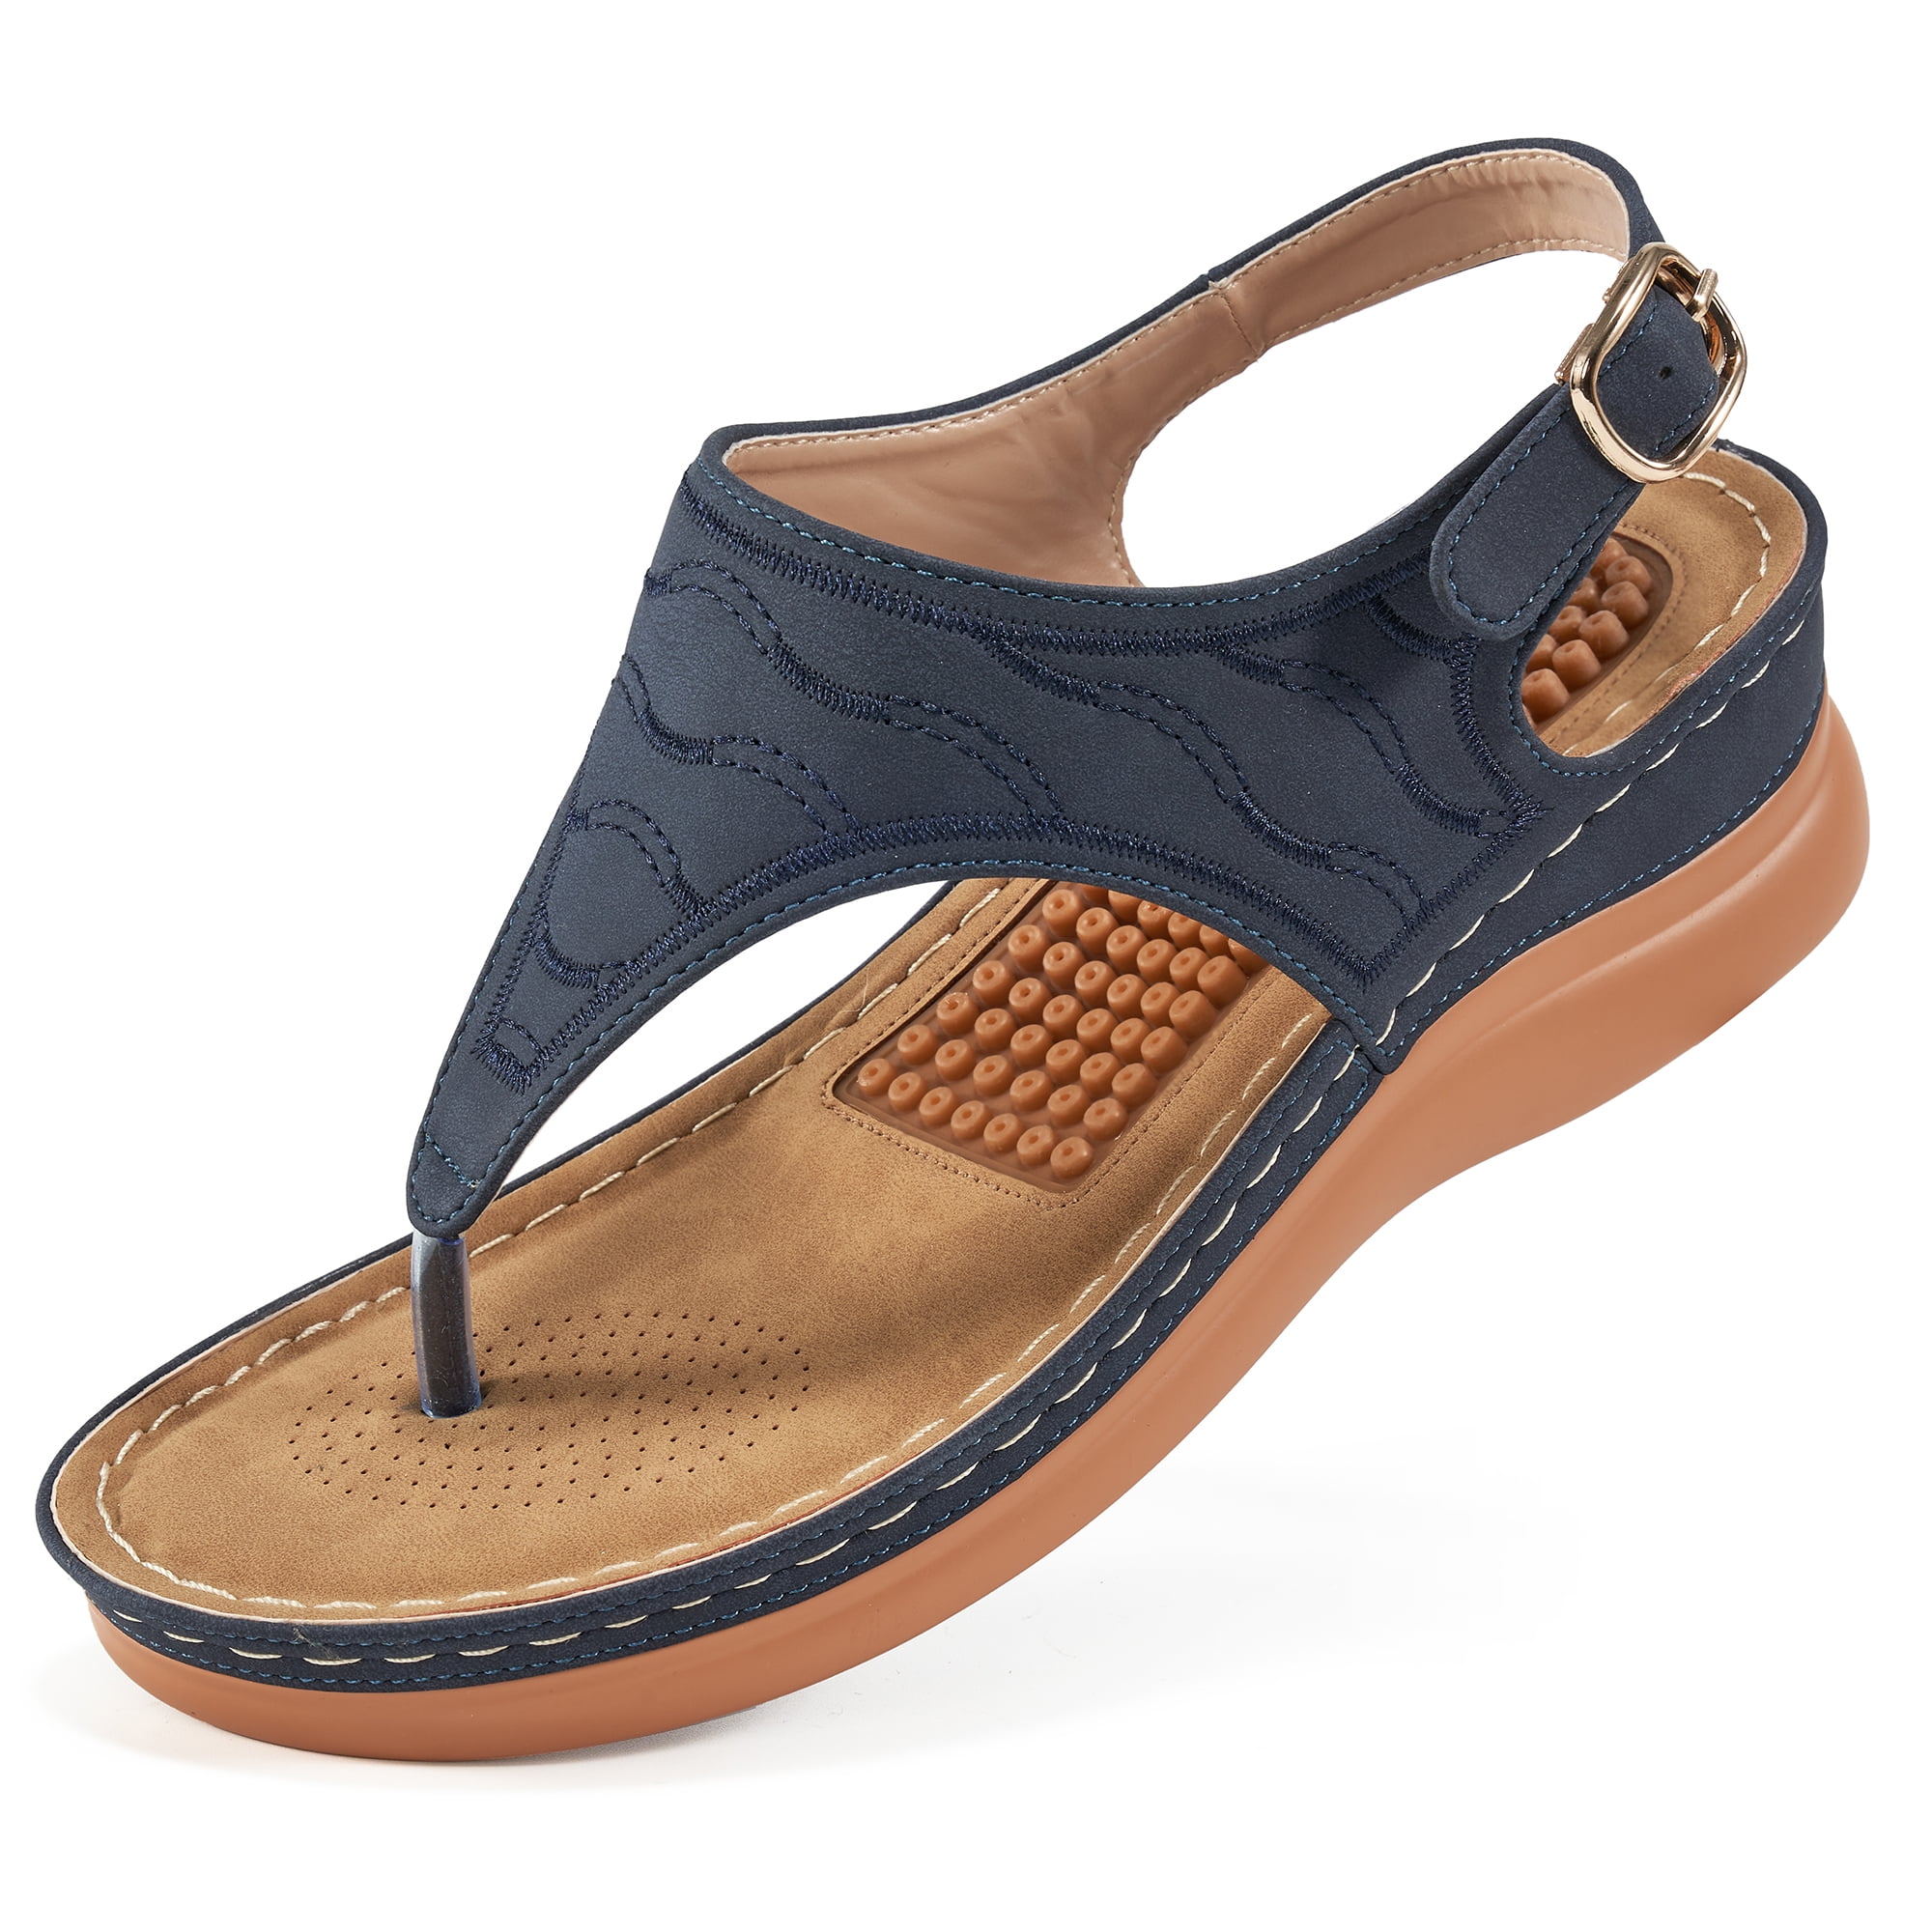 Fendi Ff Jacquard Sandals in Brown | Lyst